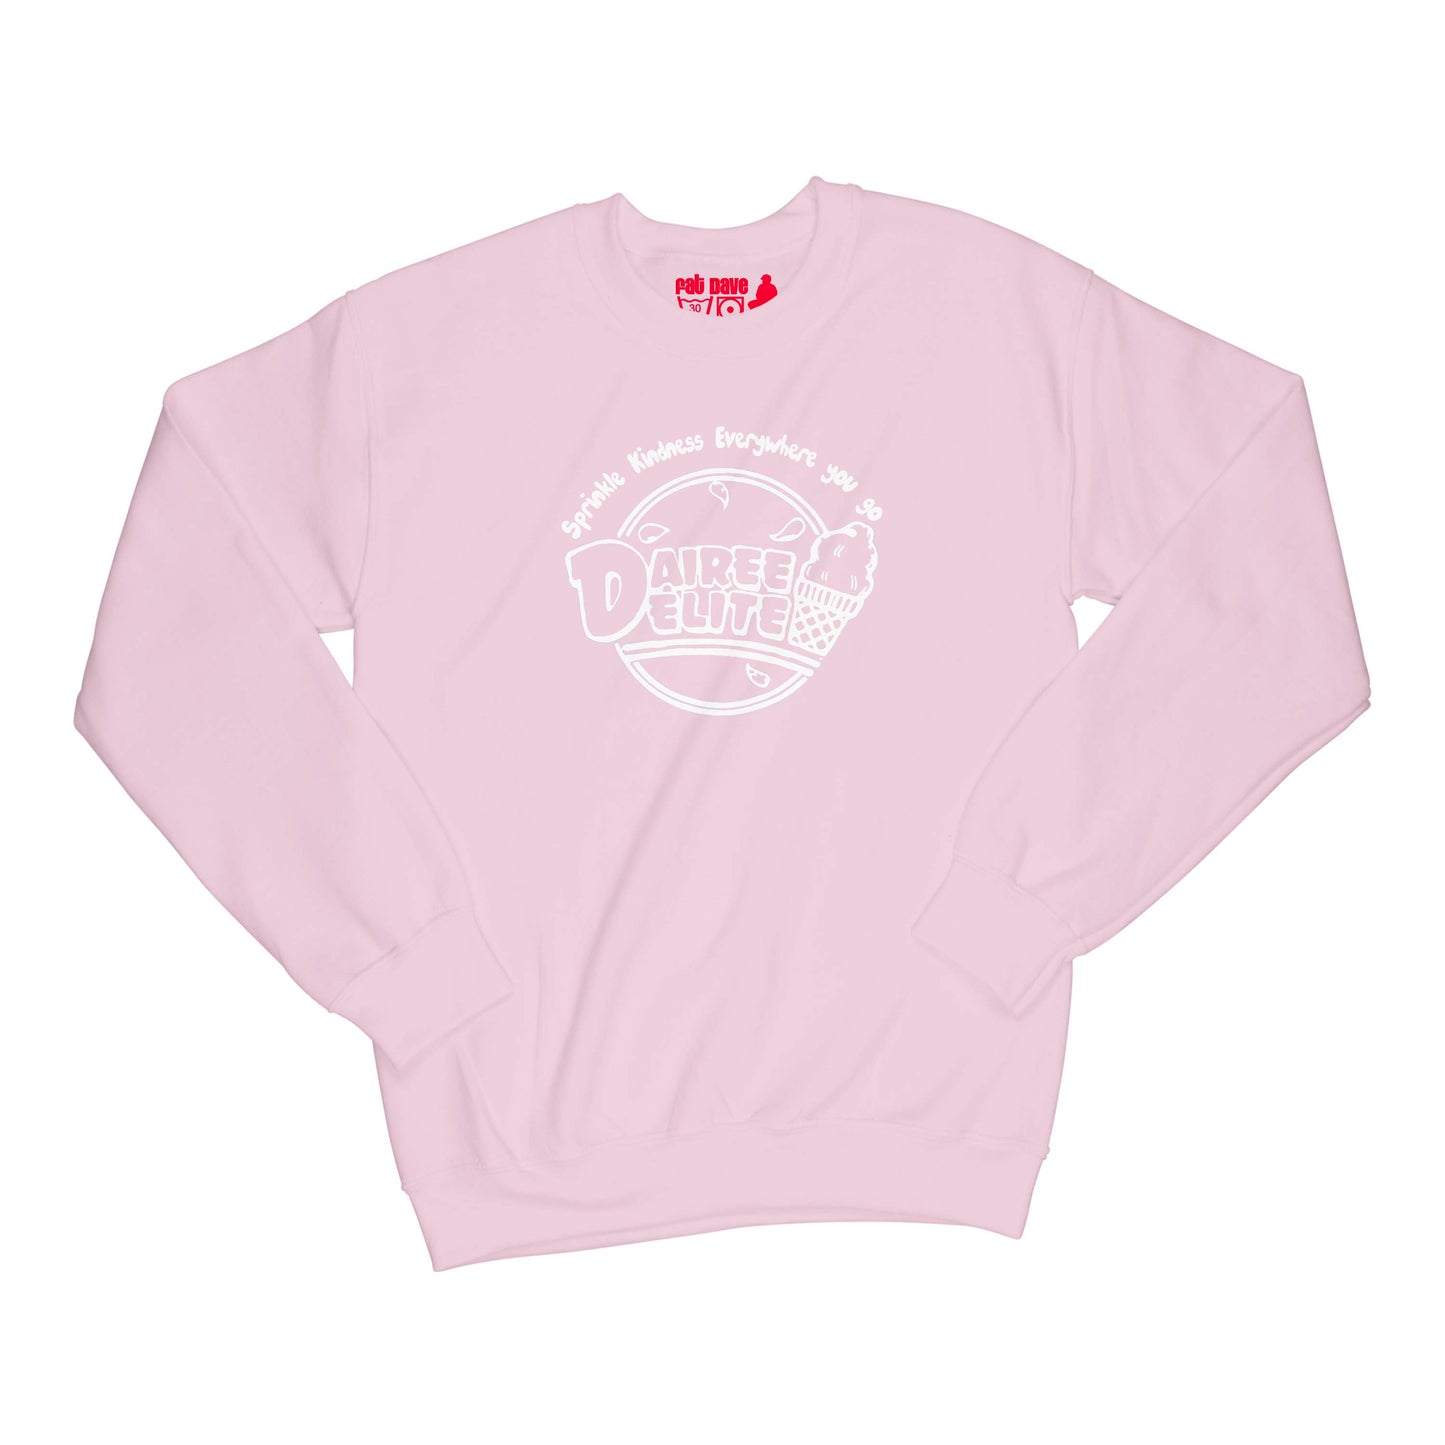 Dairee Delite 70th Anniversary Sprinkle Kindness Sweatshirt Small Light Pink